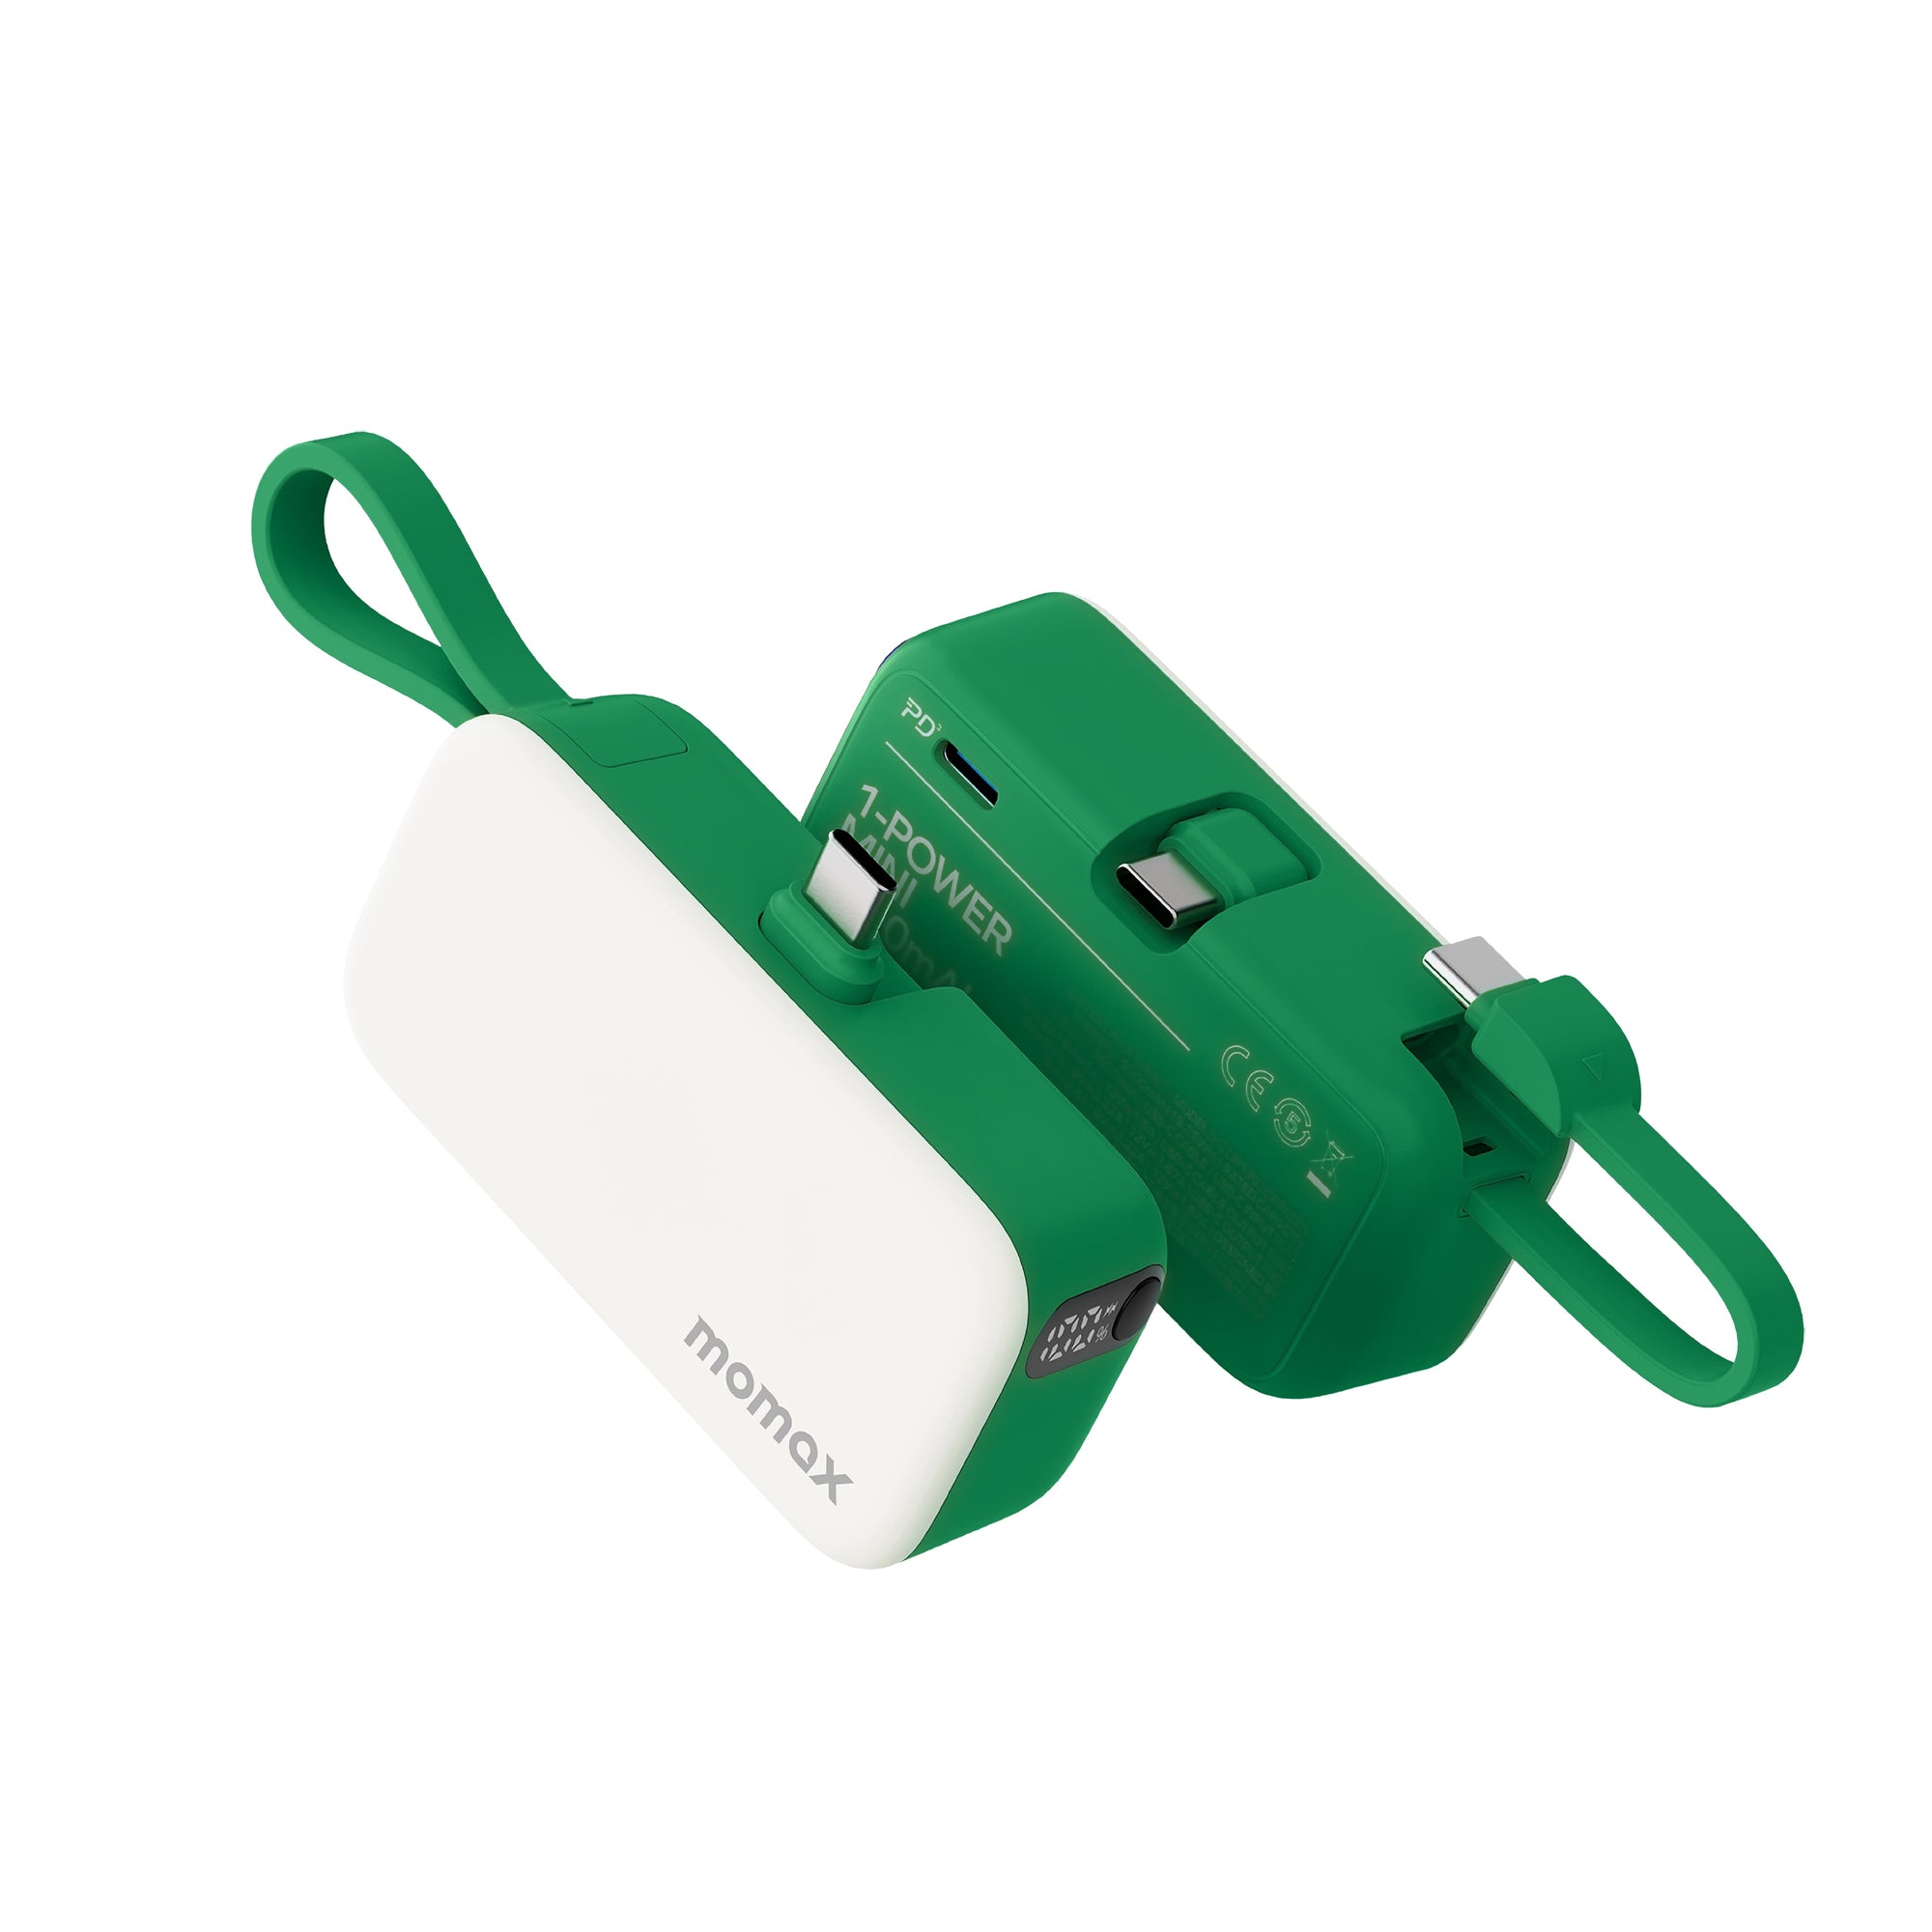 Momax 1-Power Mini Battery Pack, Green